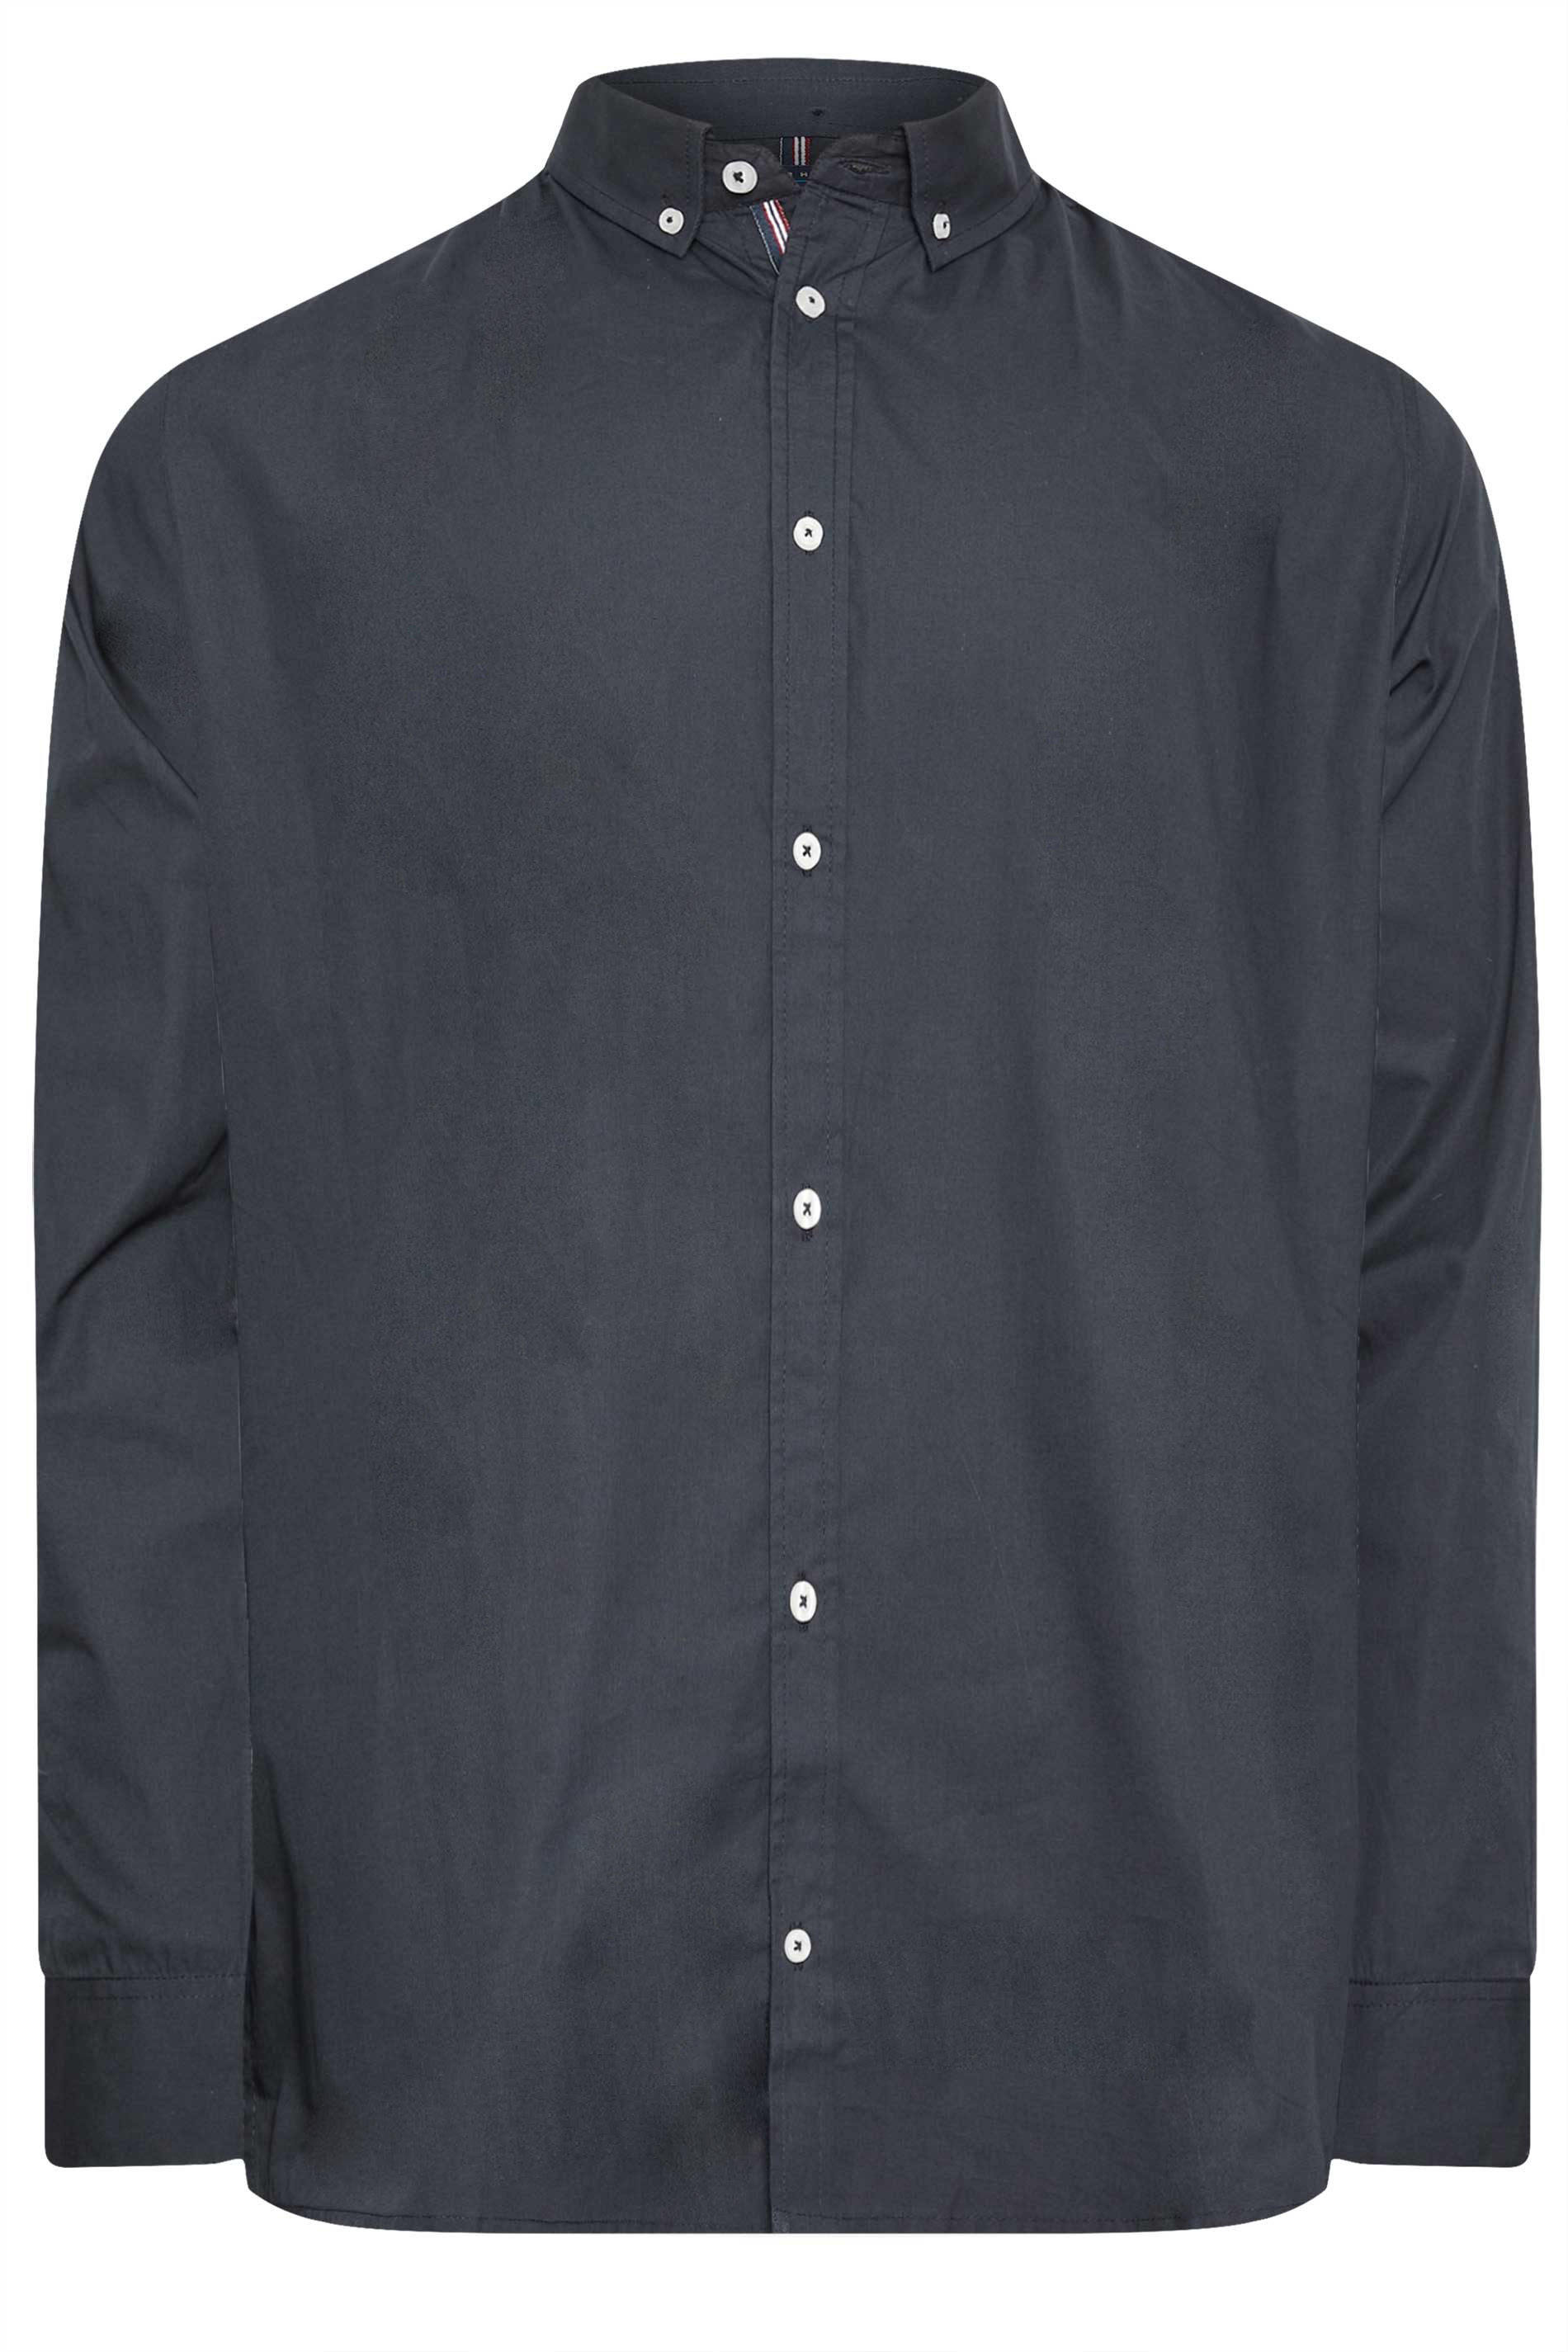 BadRhino Navy Blue Long Sleeve Poplin Shirt | BadRhino 2